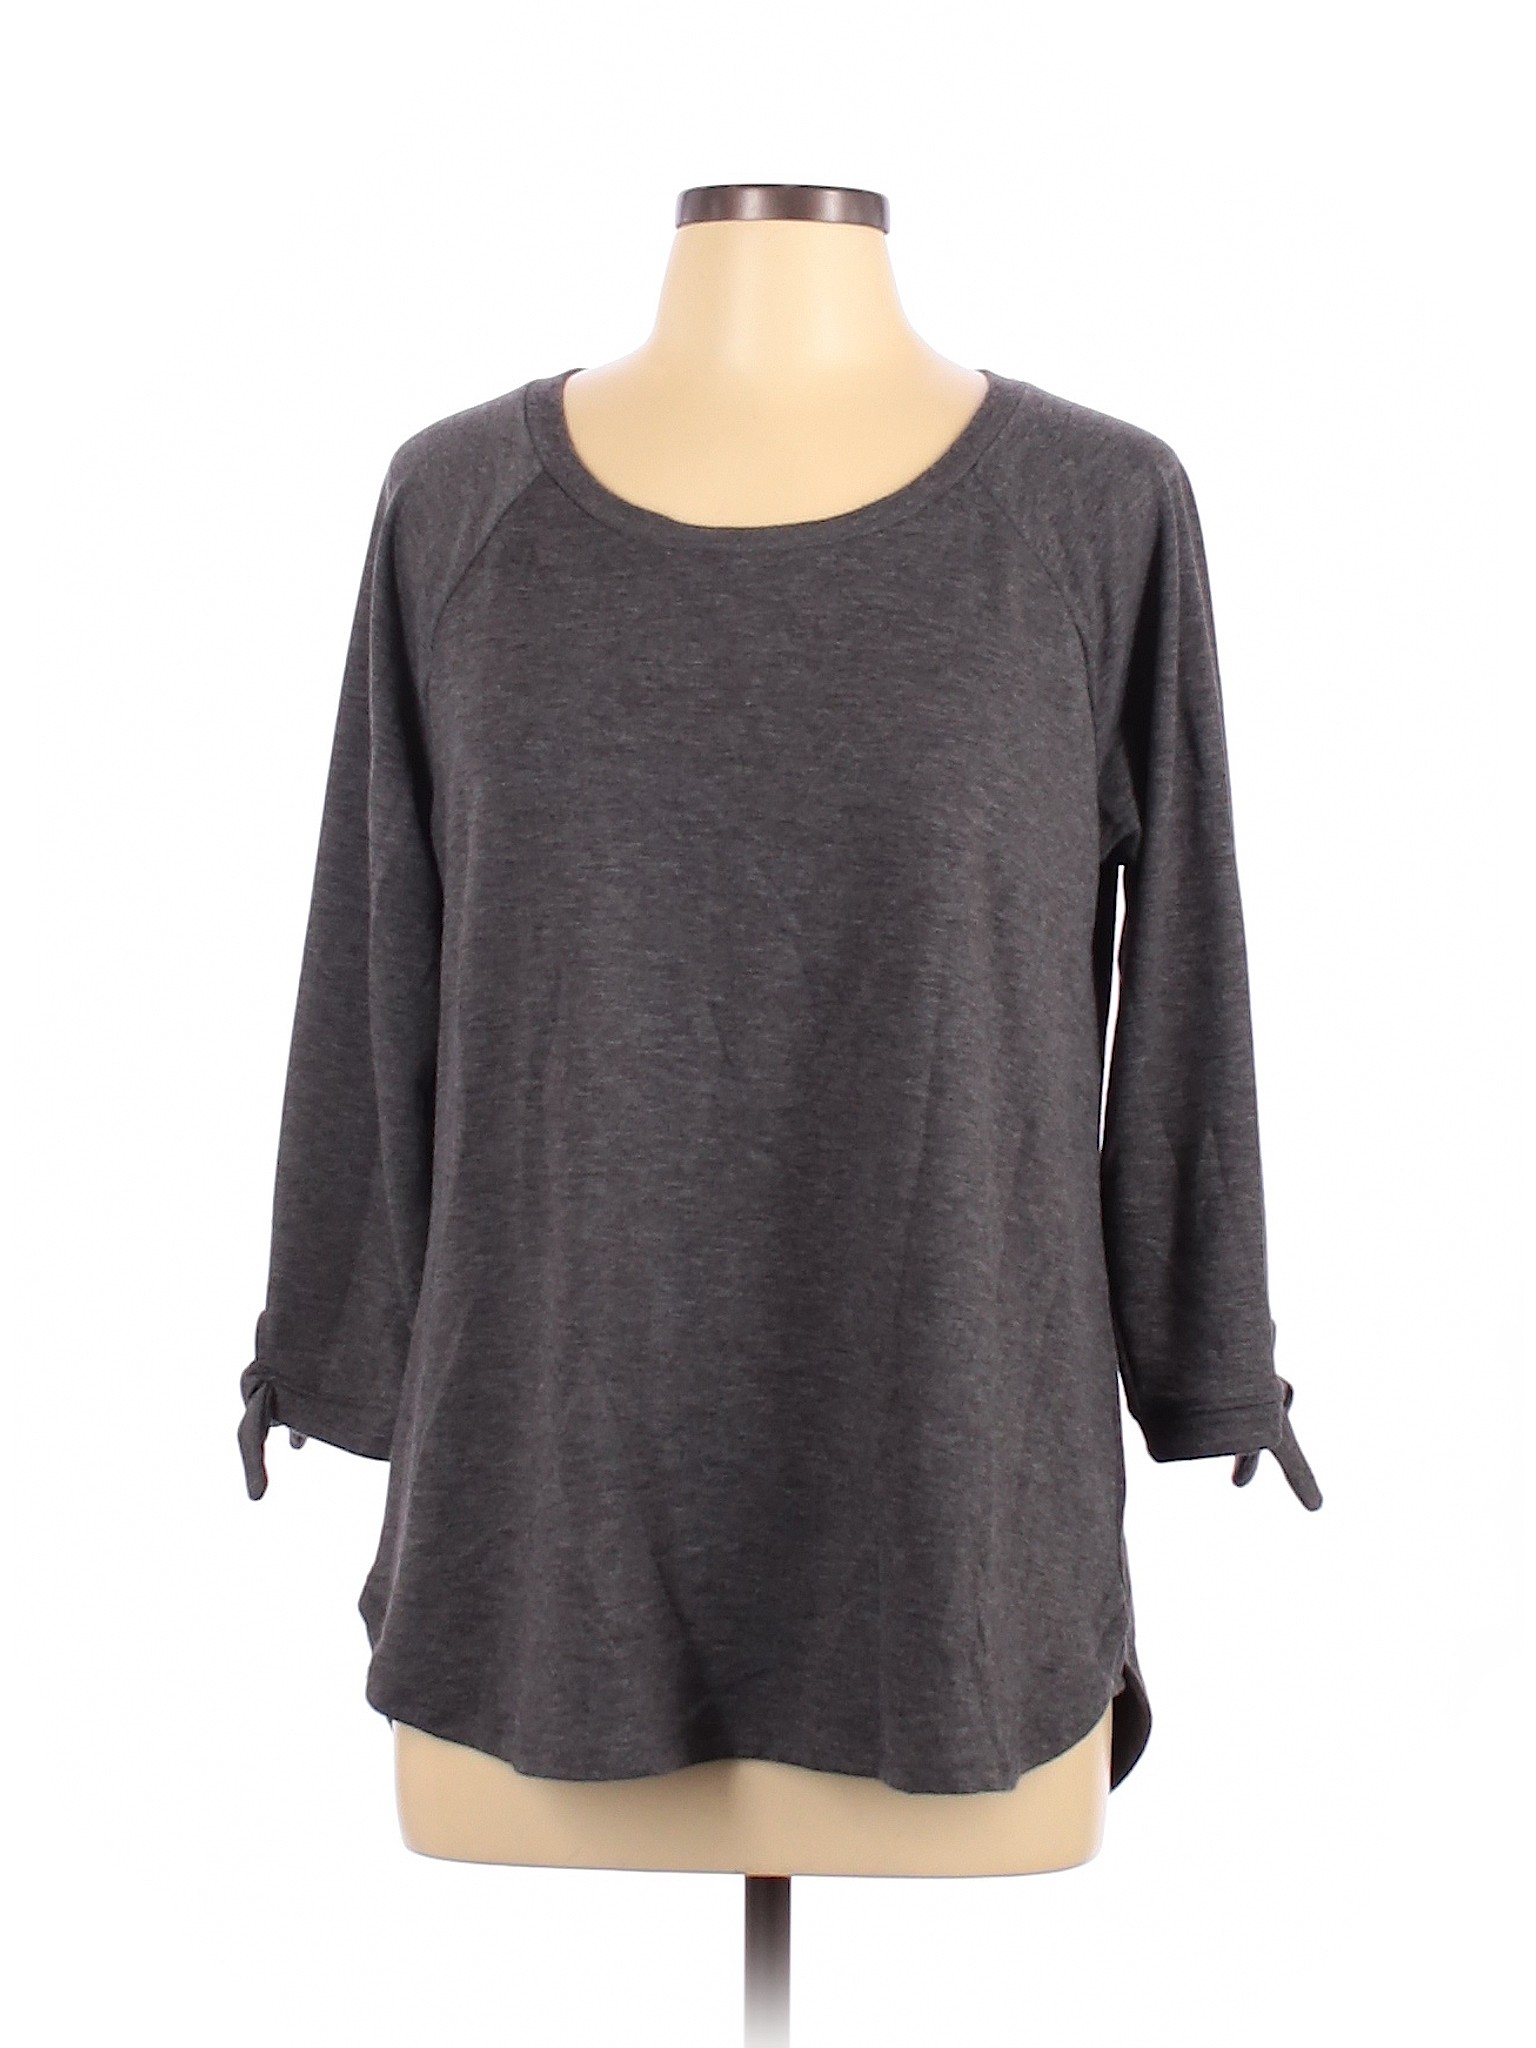 Sonoma Goods for Life Women Gray Pullover Sweater L | eBay